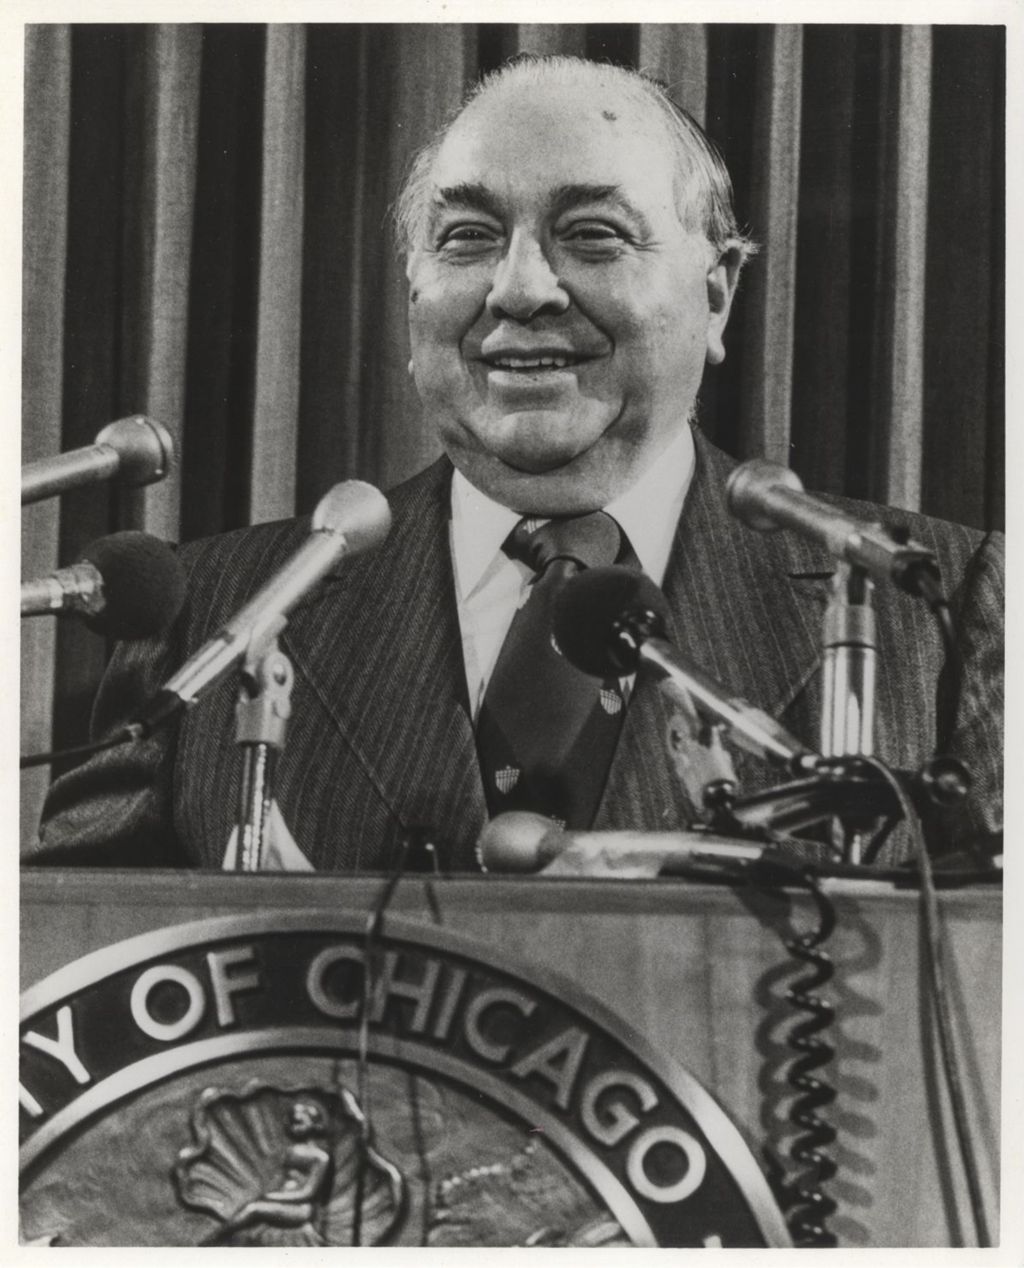 Miniature of Richard J. Daley smiling behind a podium